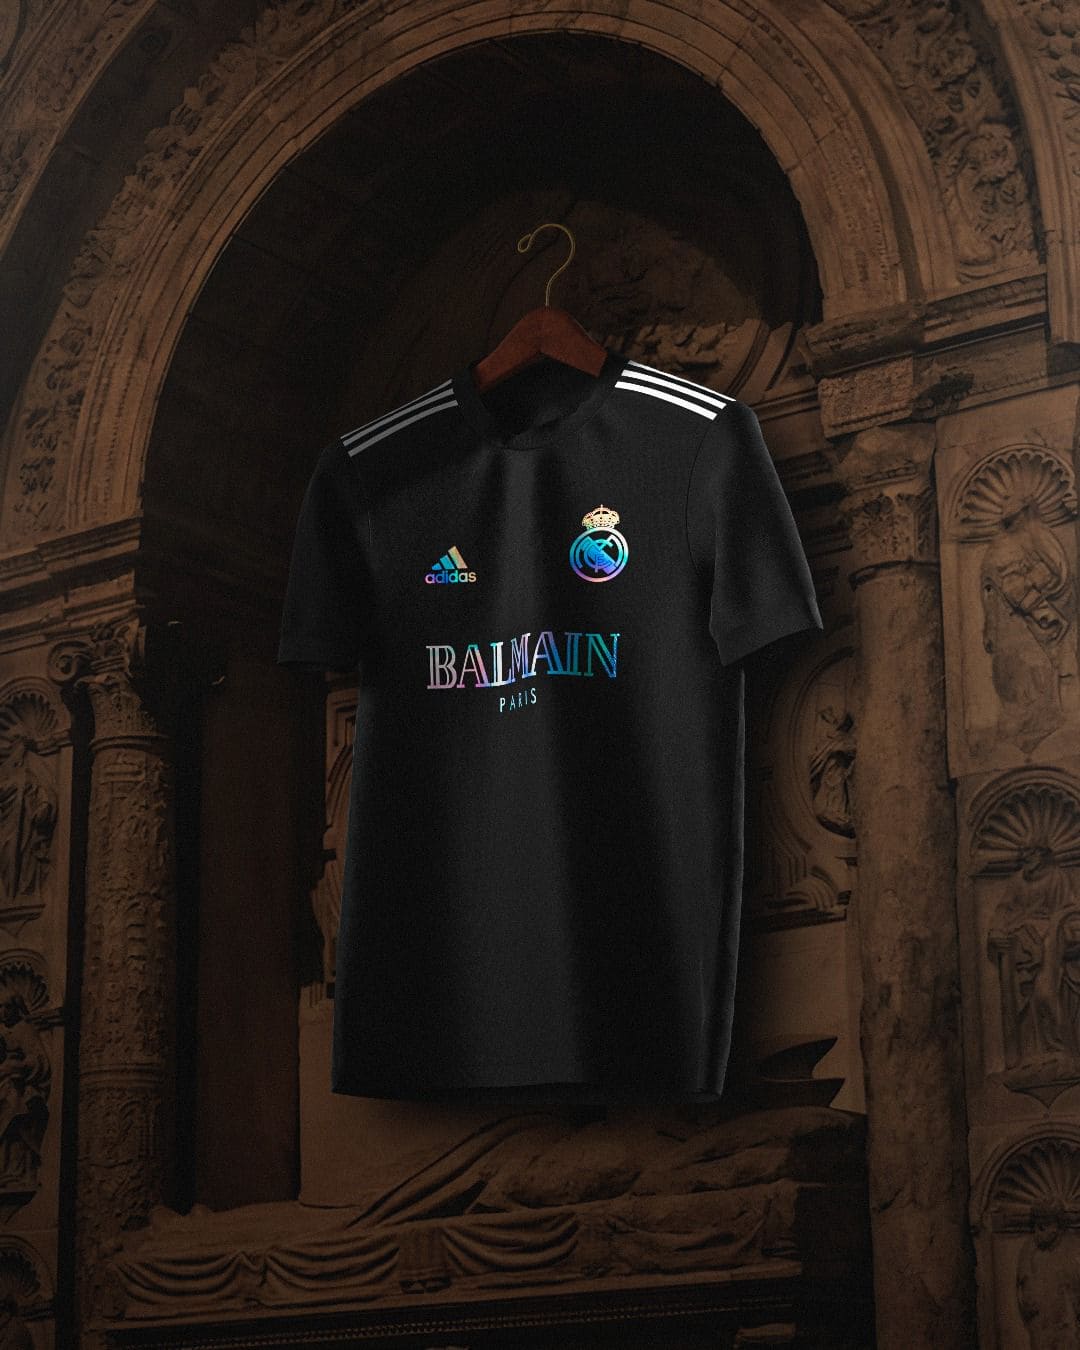 Real Madrid x Balmain Black Shirt